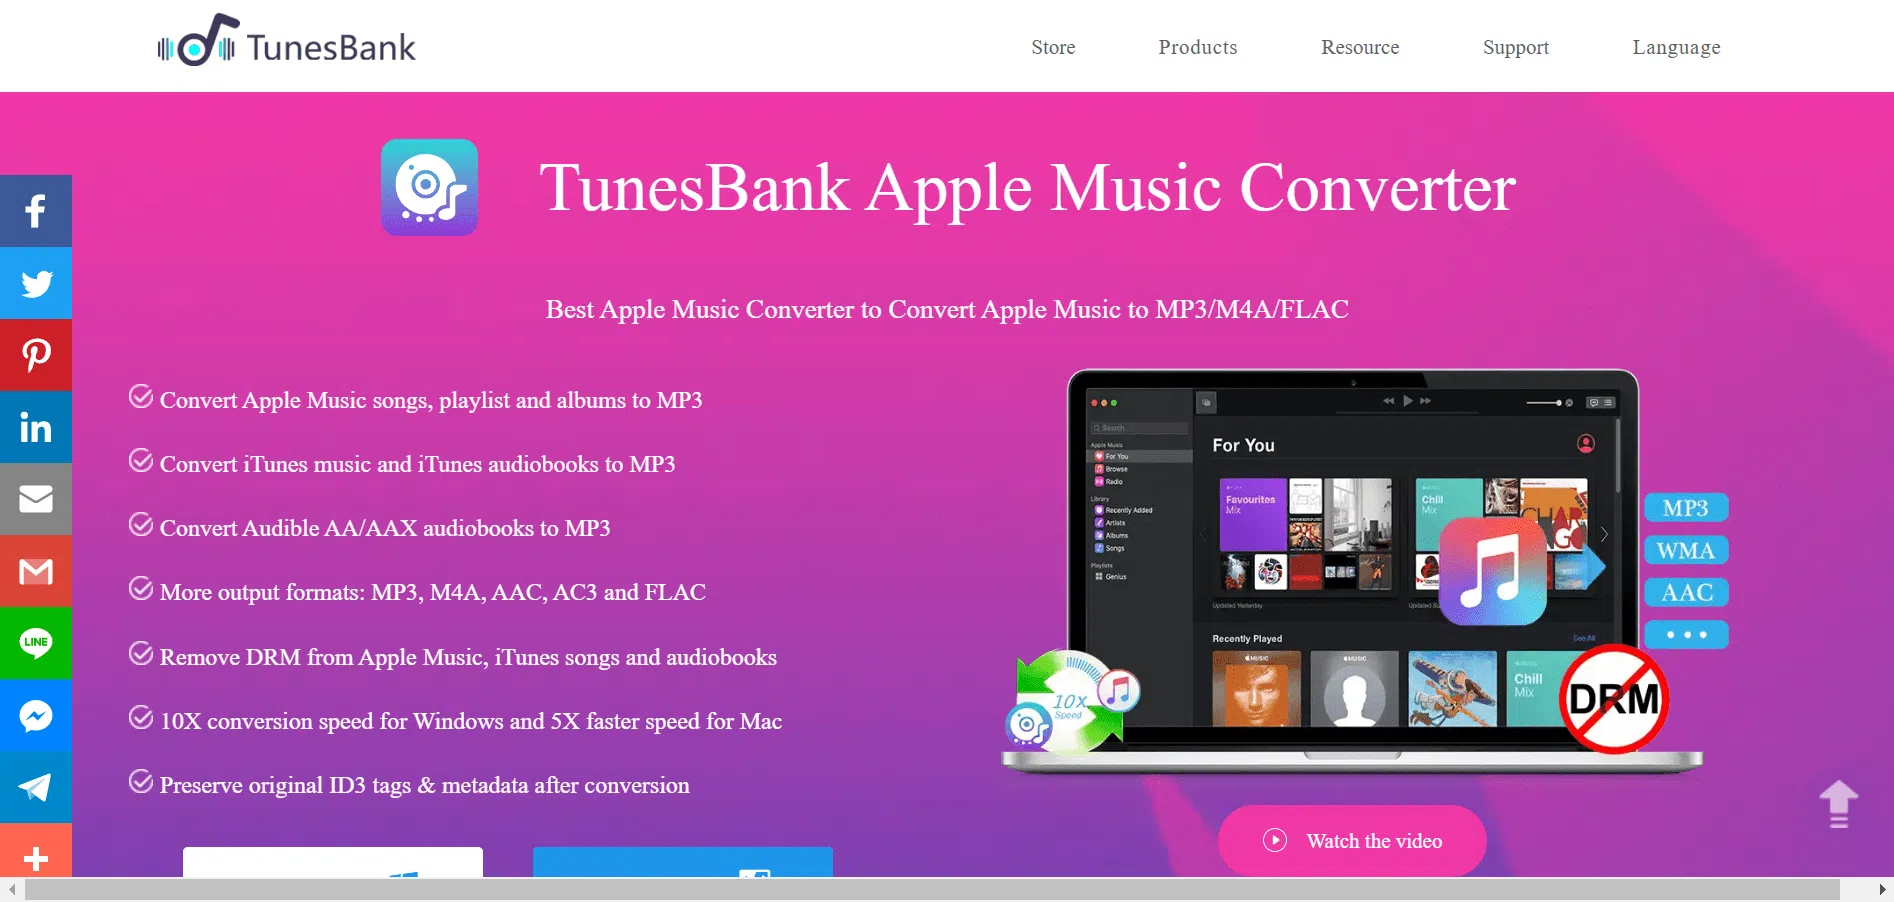 TunesBank-Apple-Music-Converter Review